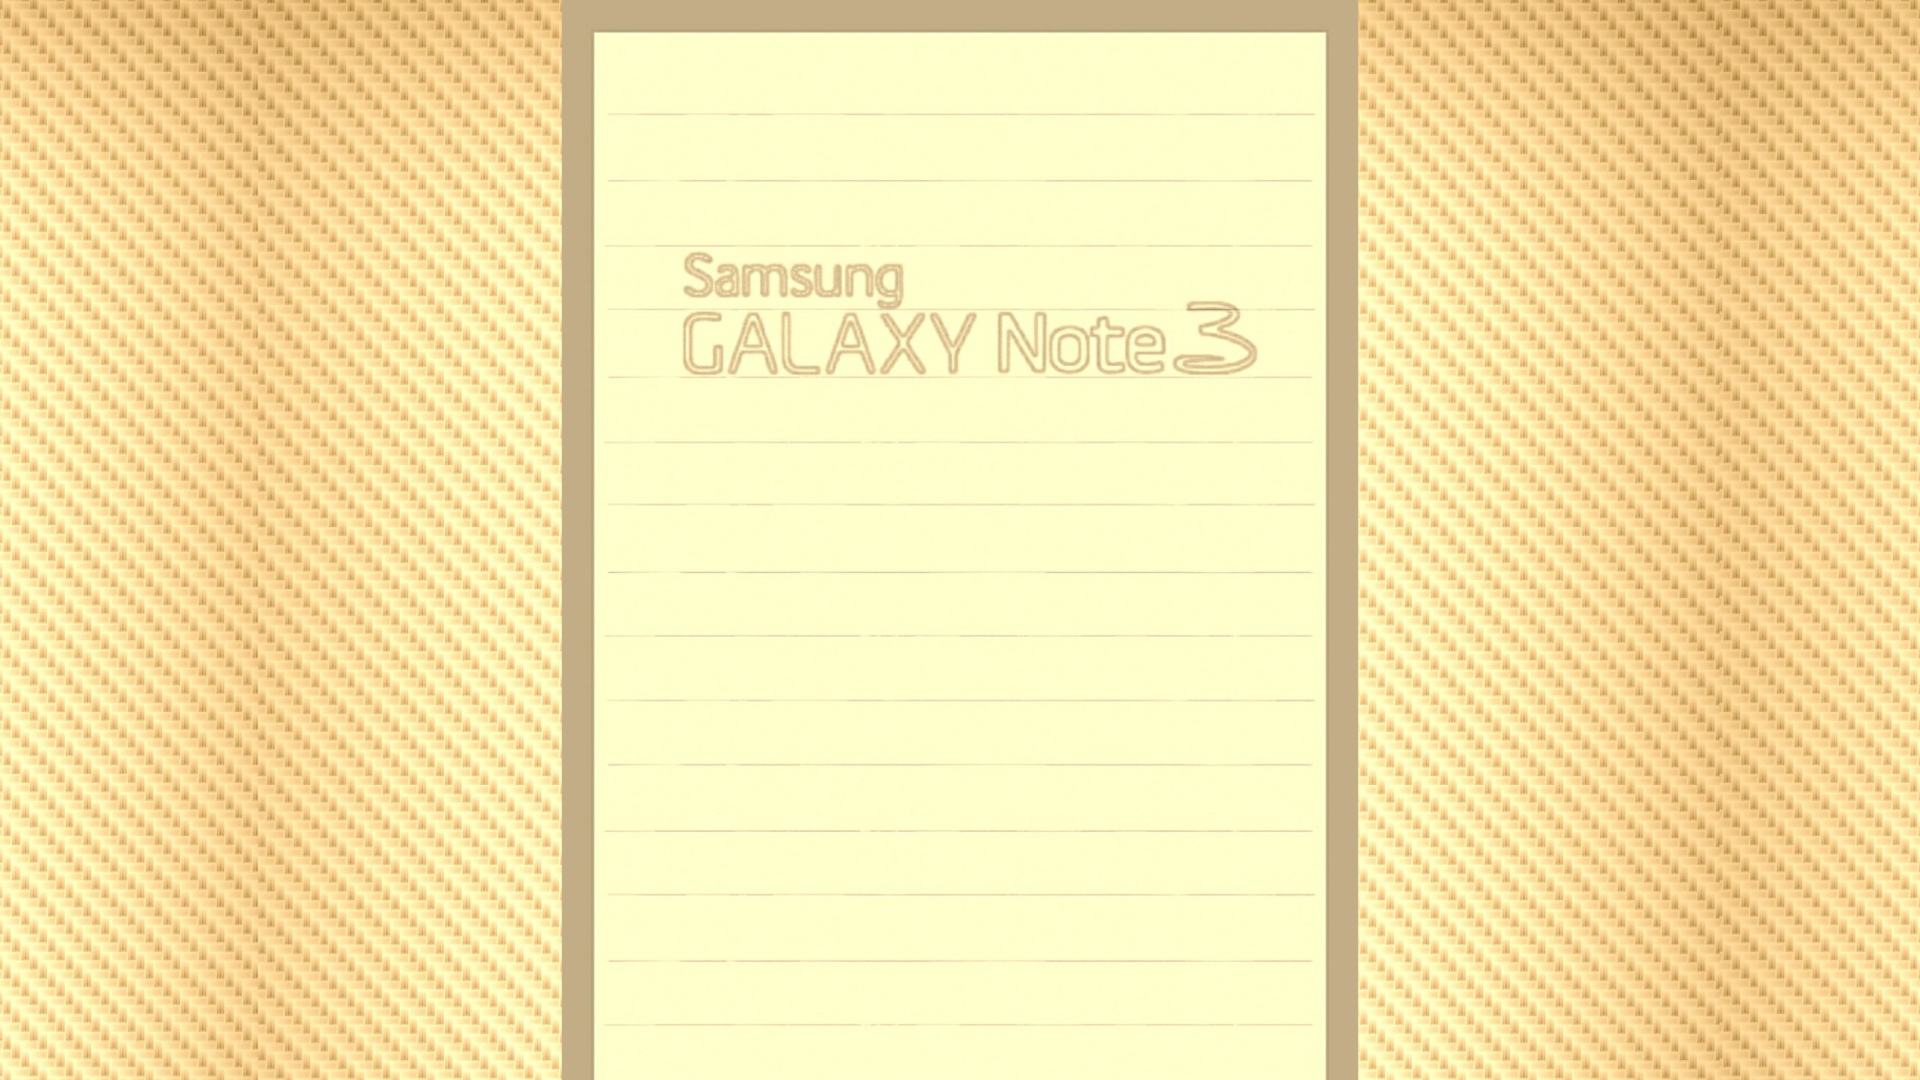 Galaxy Note 3 wallpaper 1920x1080